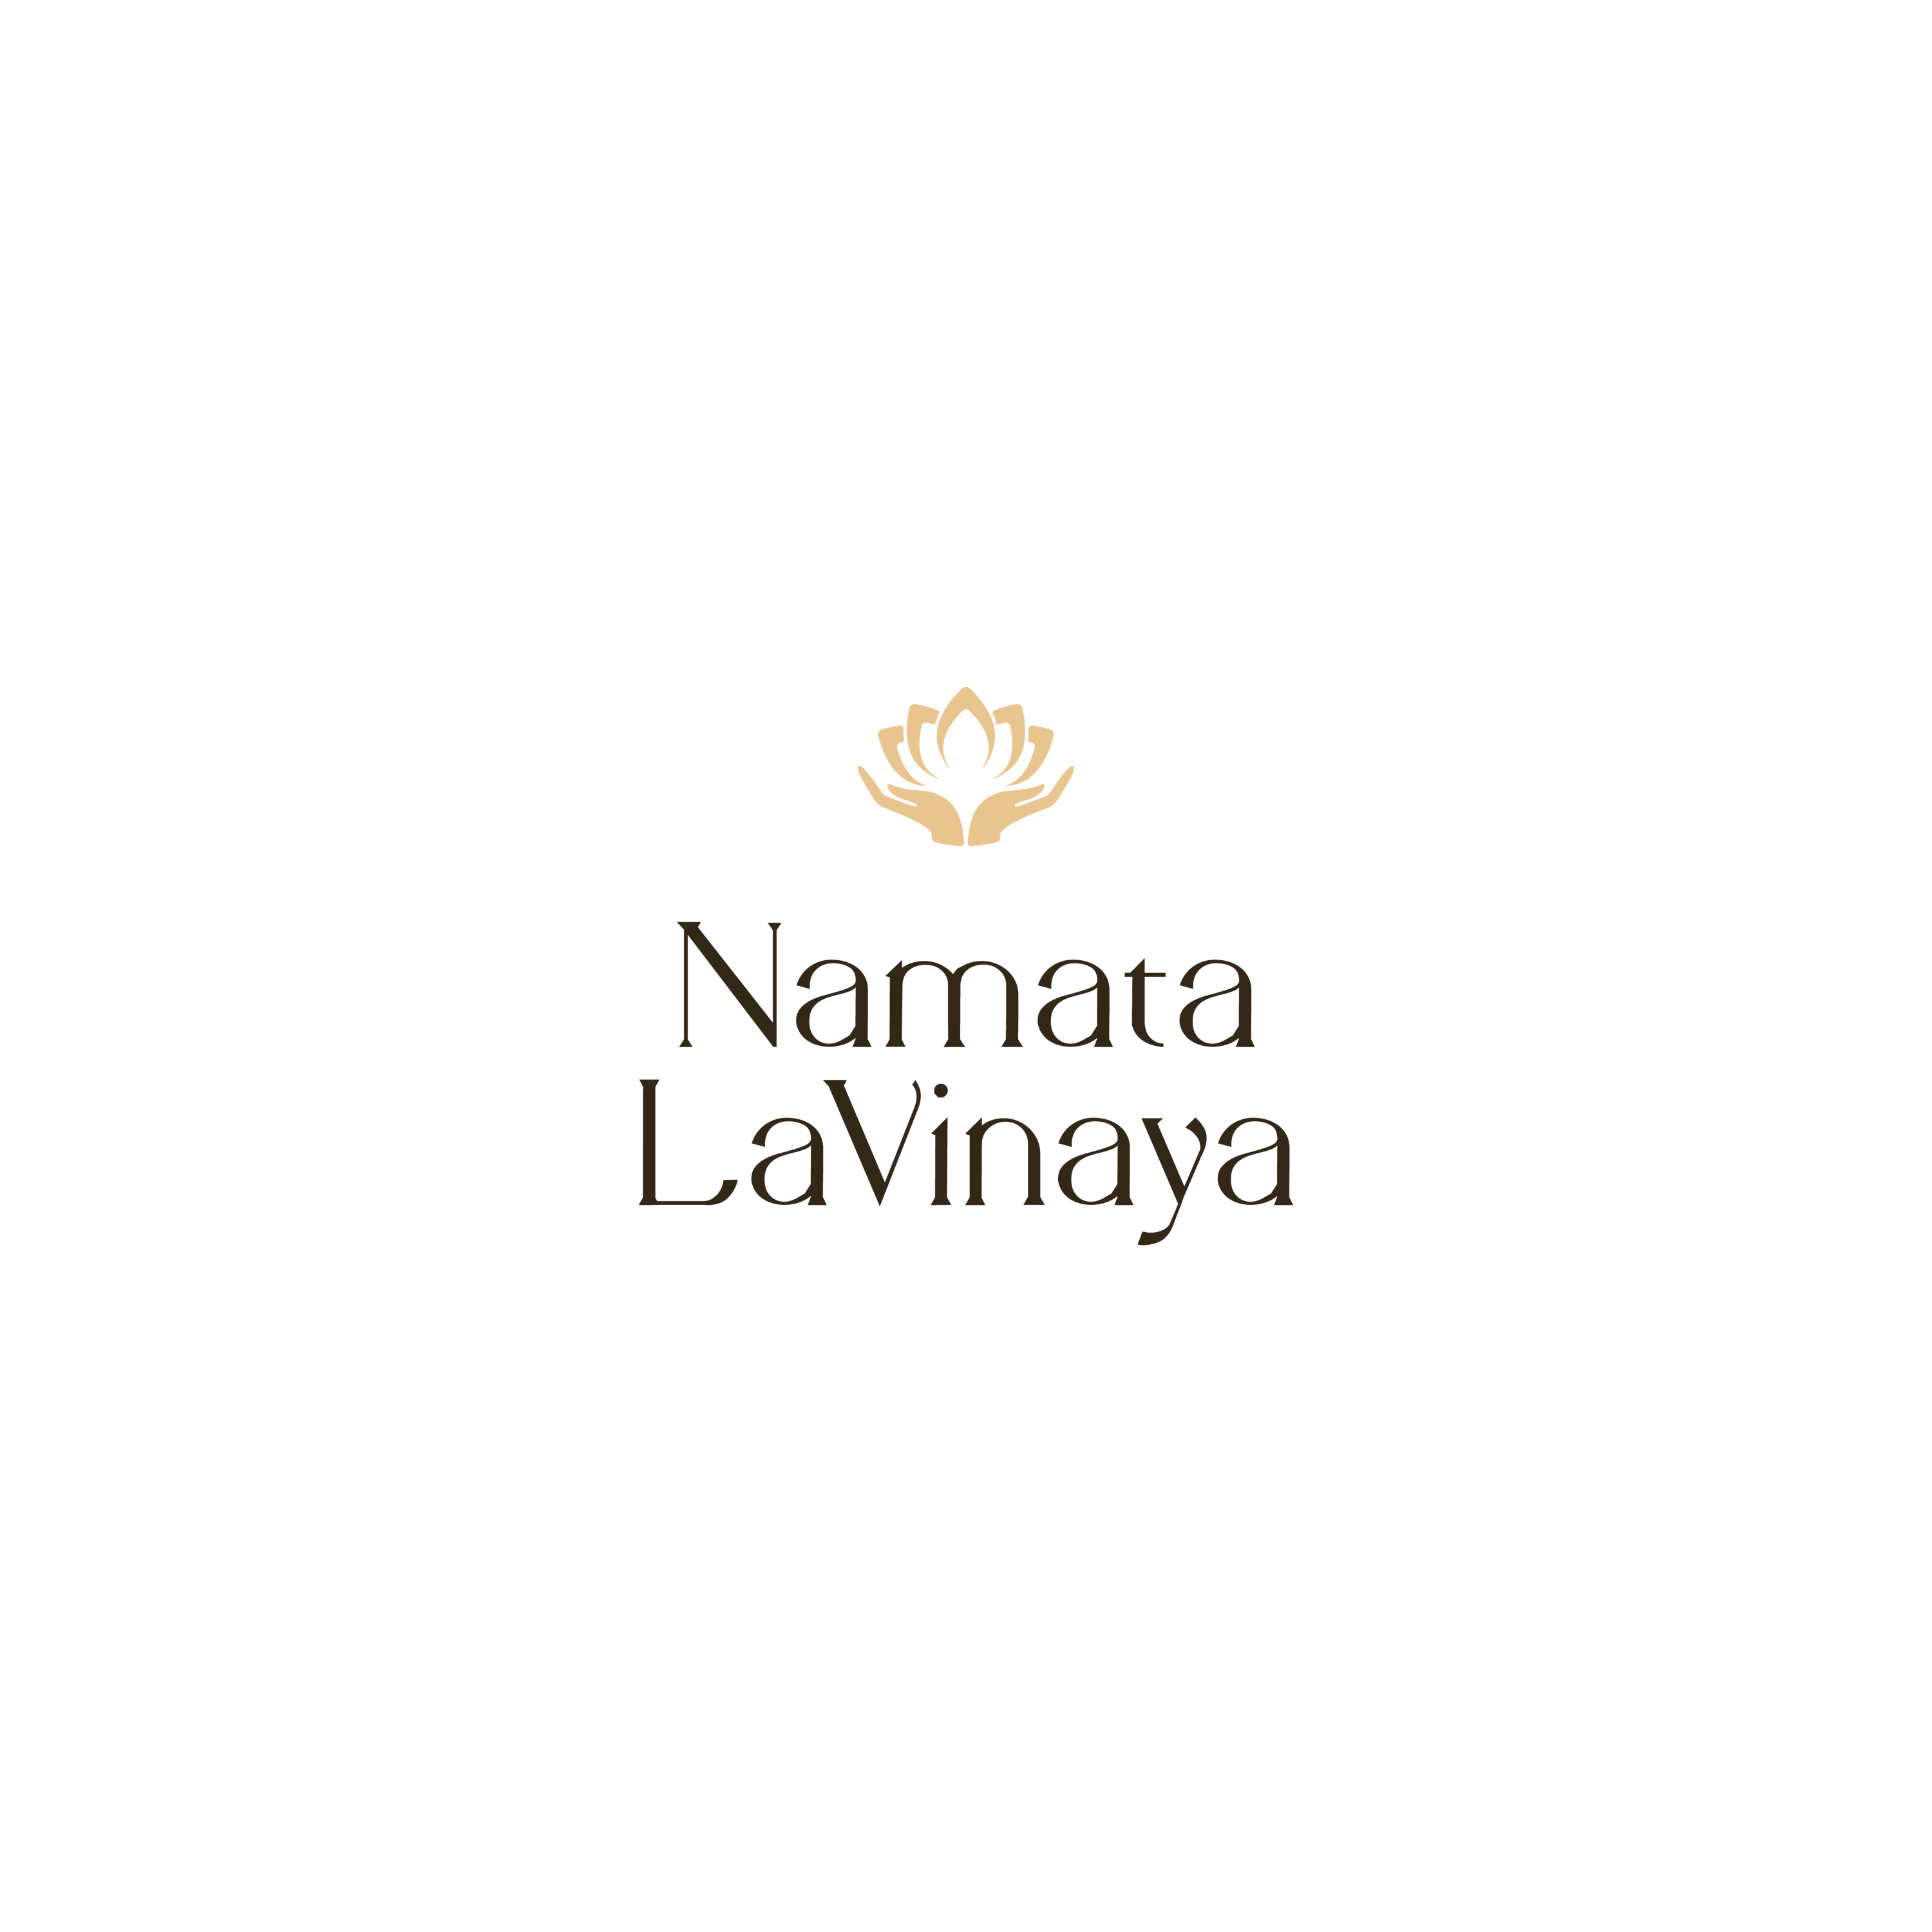 Linktree – Namata LaVinaya